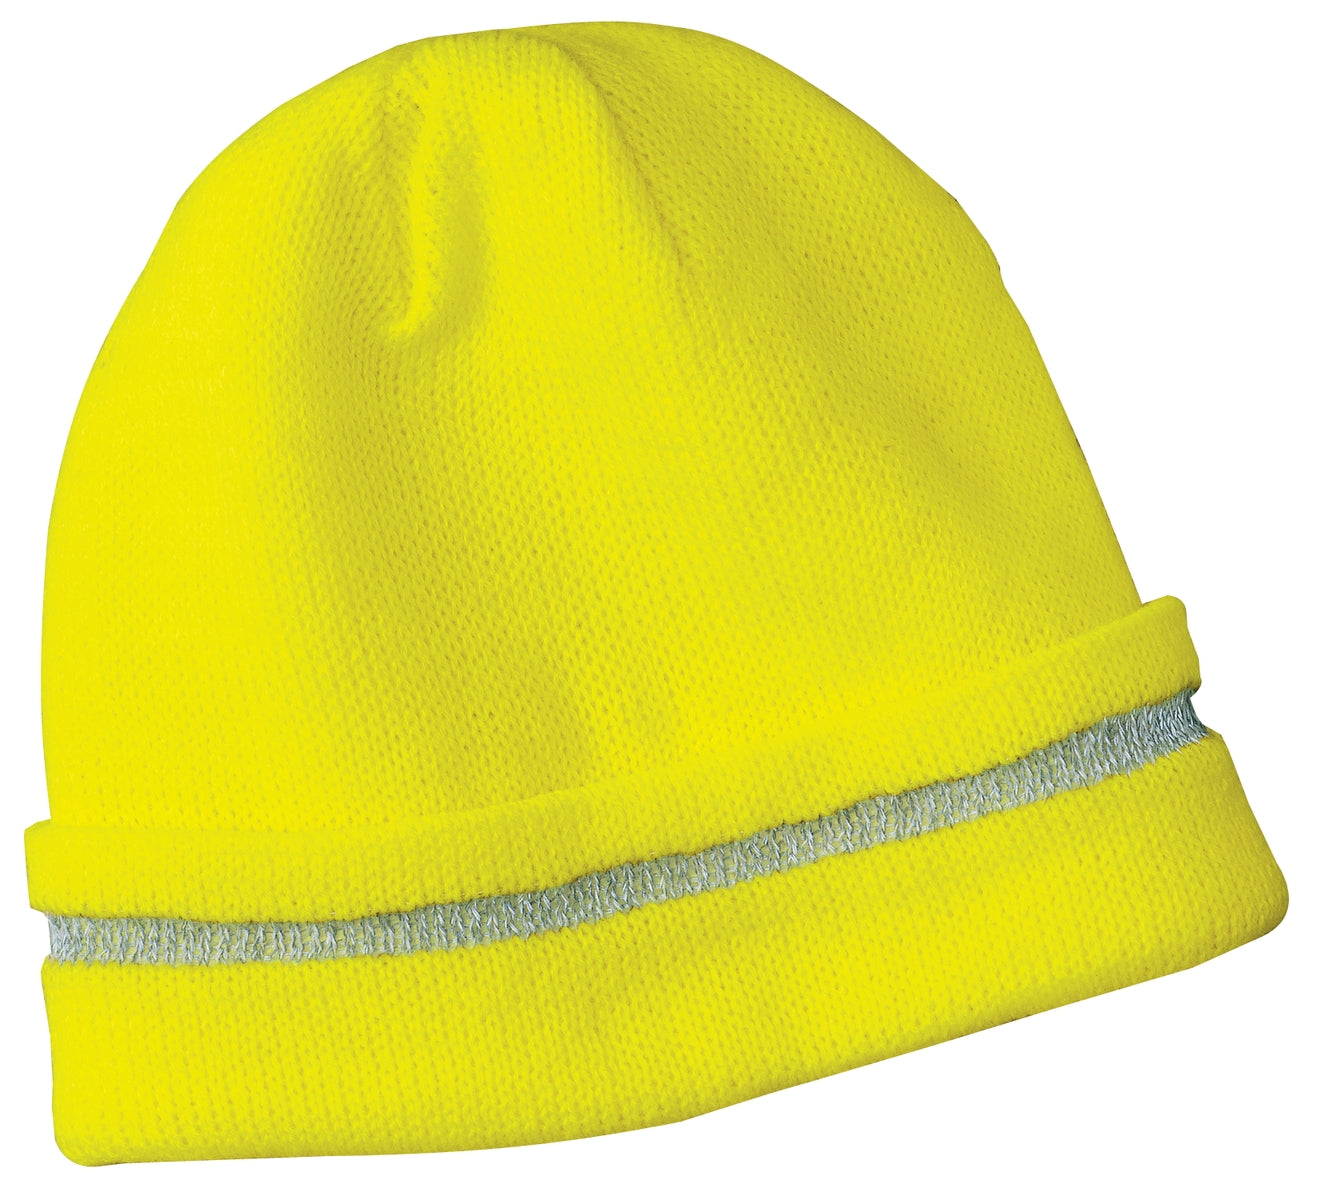 Caps Safety Yellow/ Reflective OSFA CornerStone